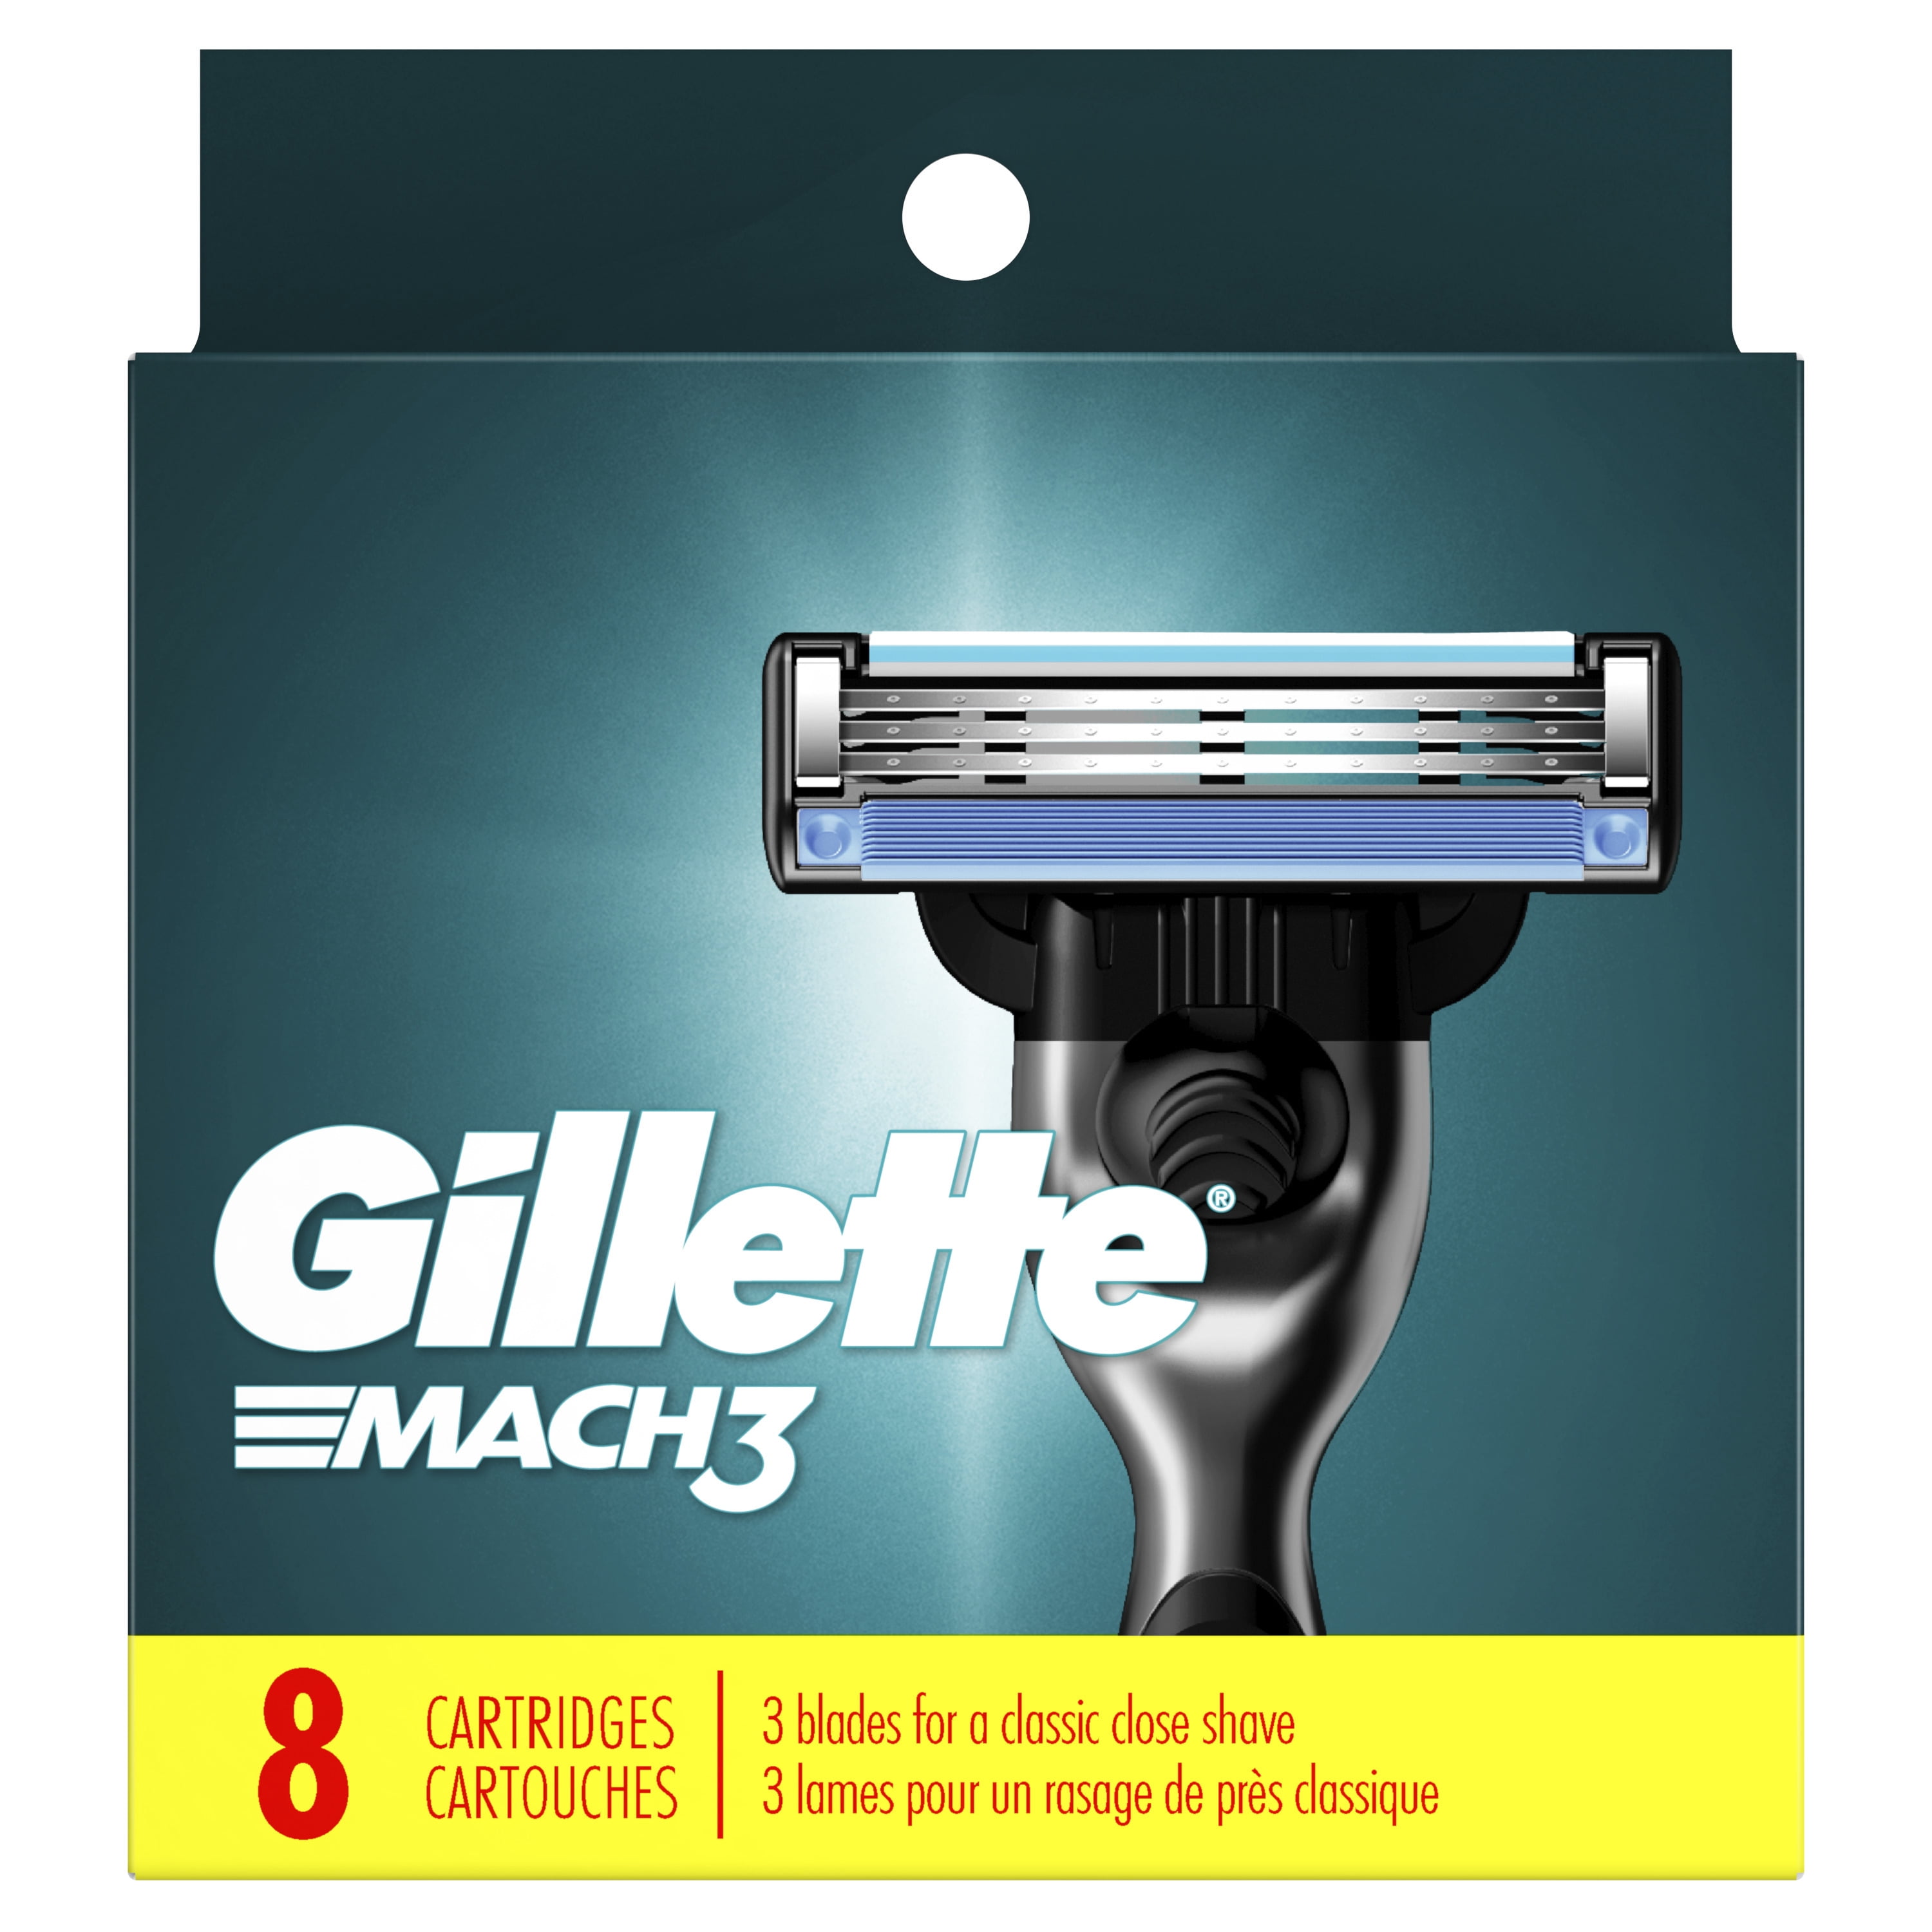 Buy Gillette Mach3 Razor with 2 Blade Refills at Ubuy UK